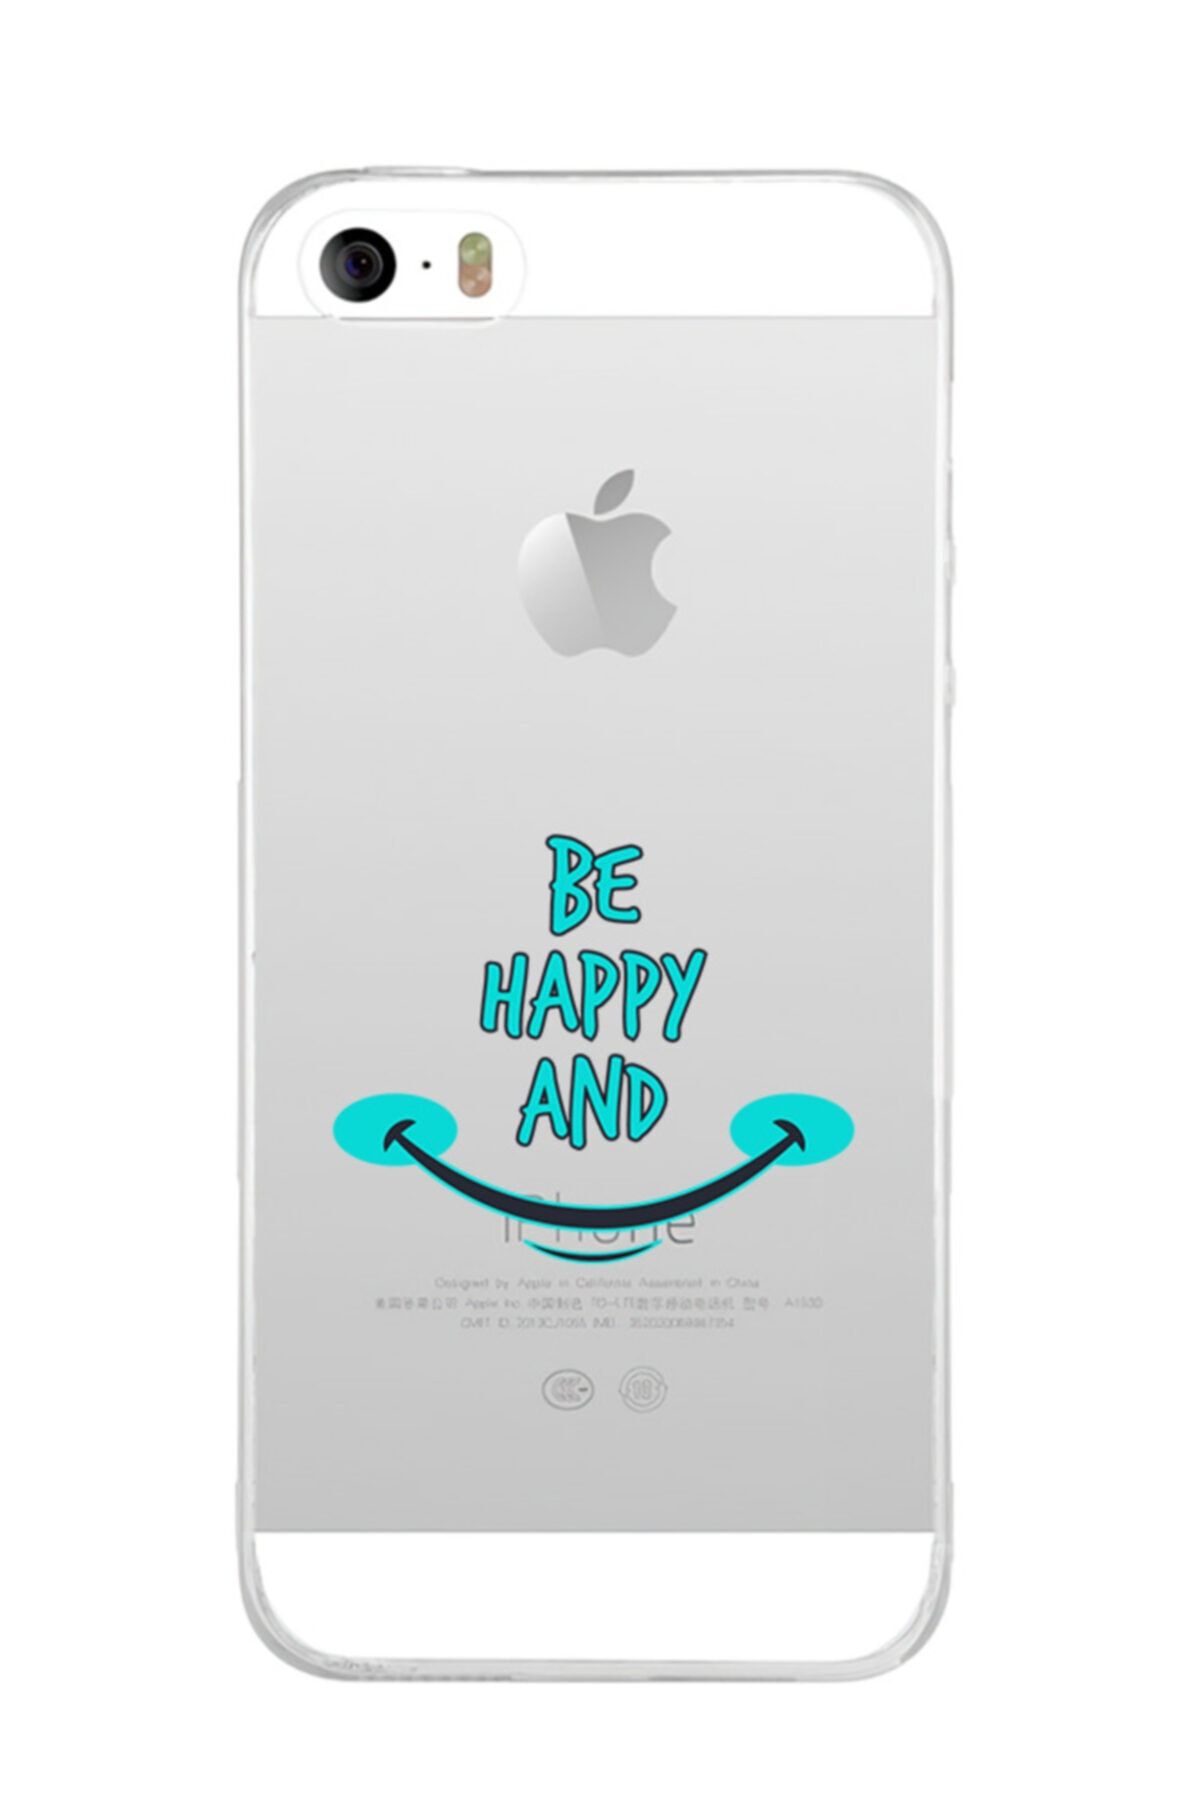 Dafhi Aksesuar Dafhi Apple Iphone 5s Be Happy And Telefon Kılıfı